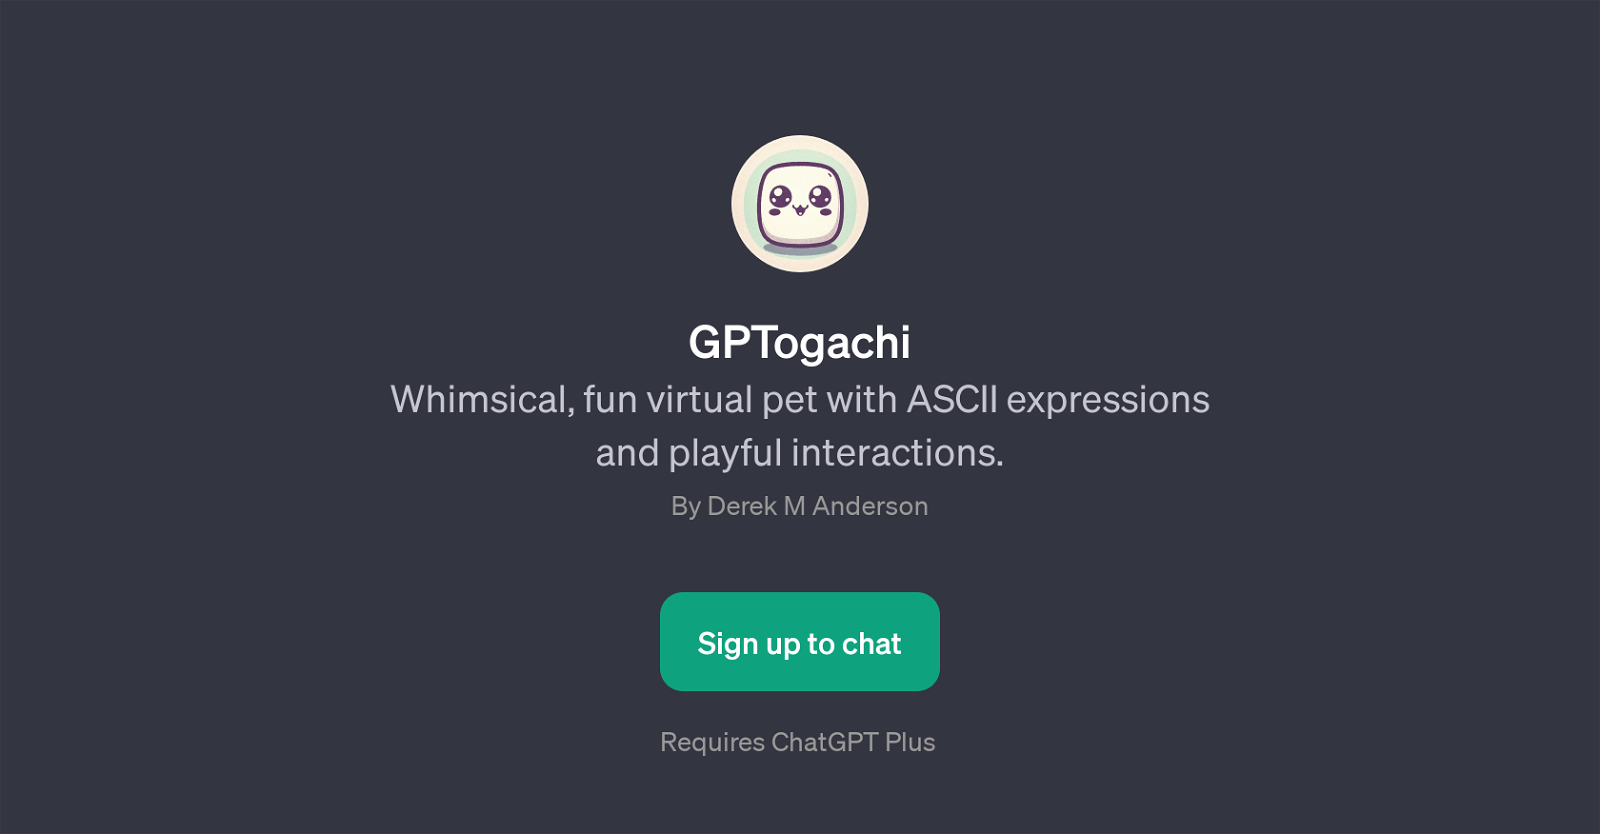 GPTogachi website